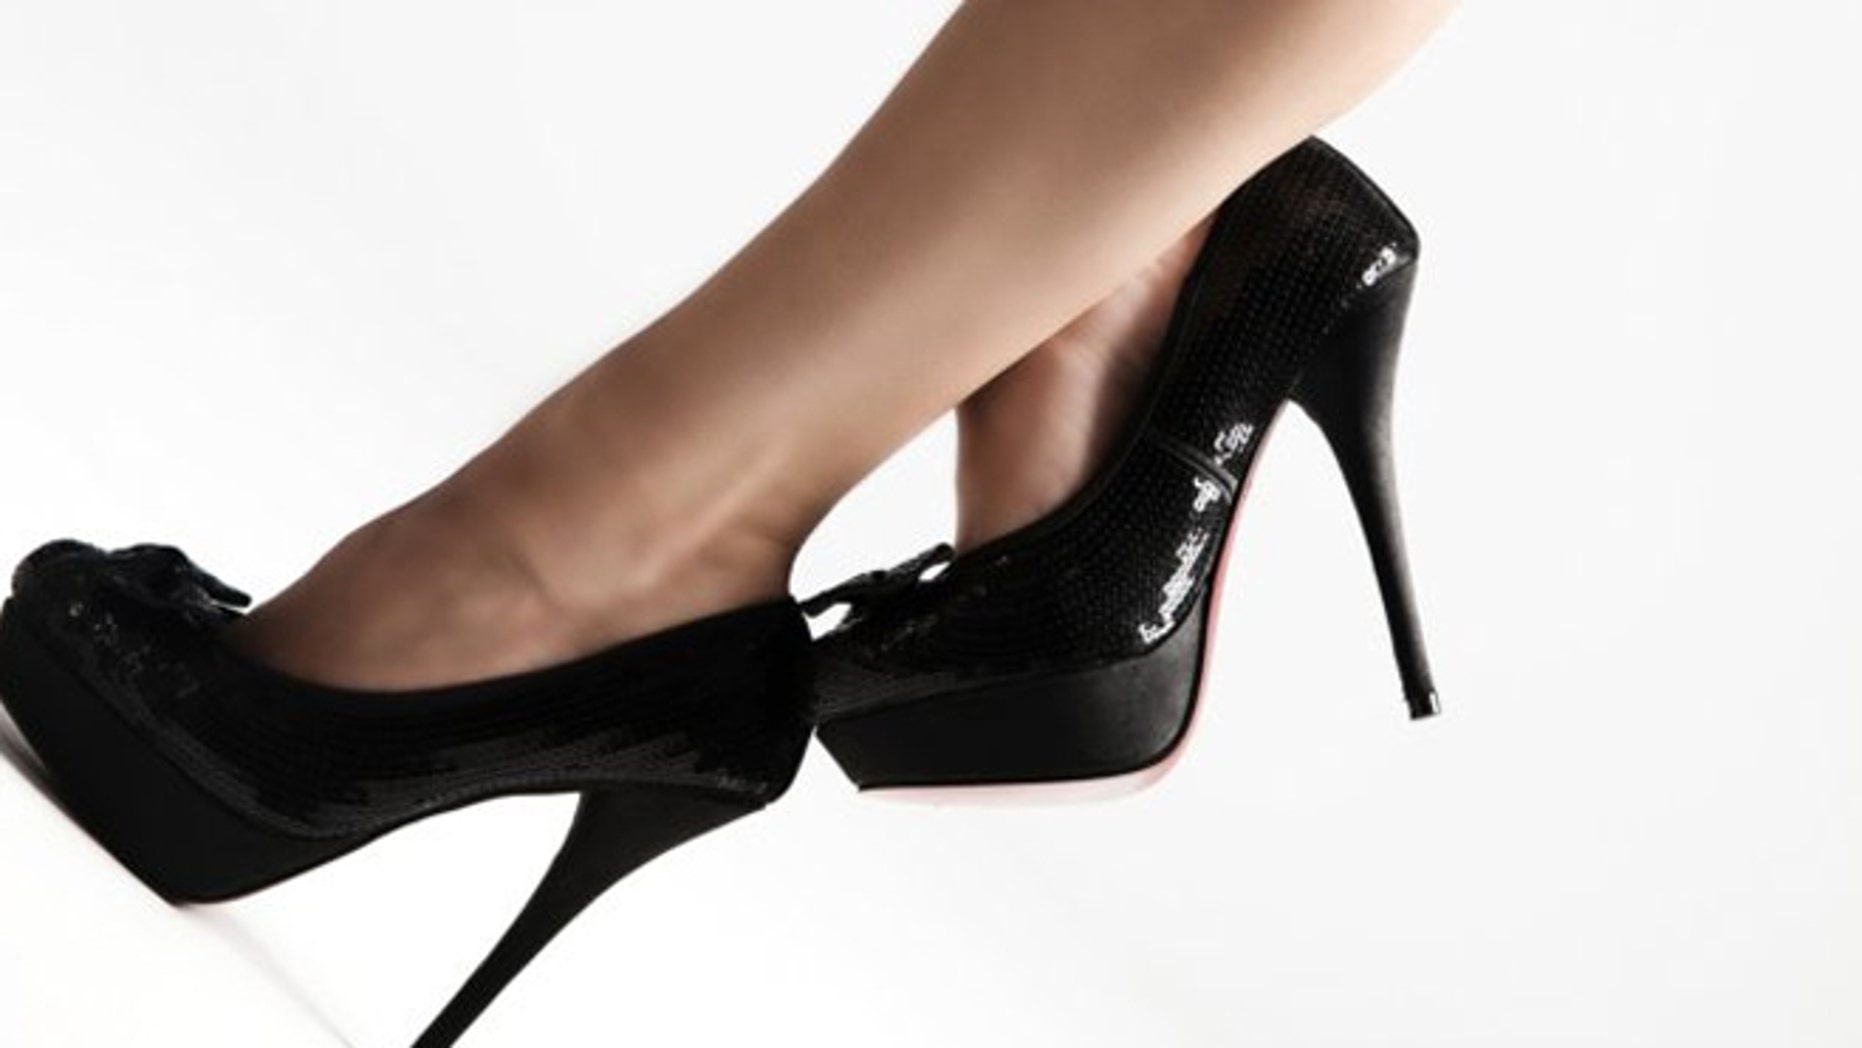 Restaurant sparks anger over dress code requiring women to wear heels ...